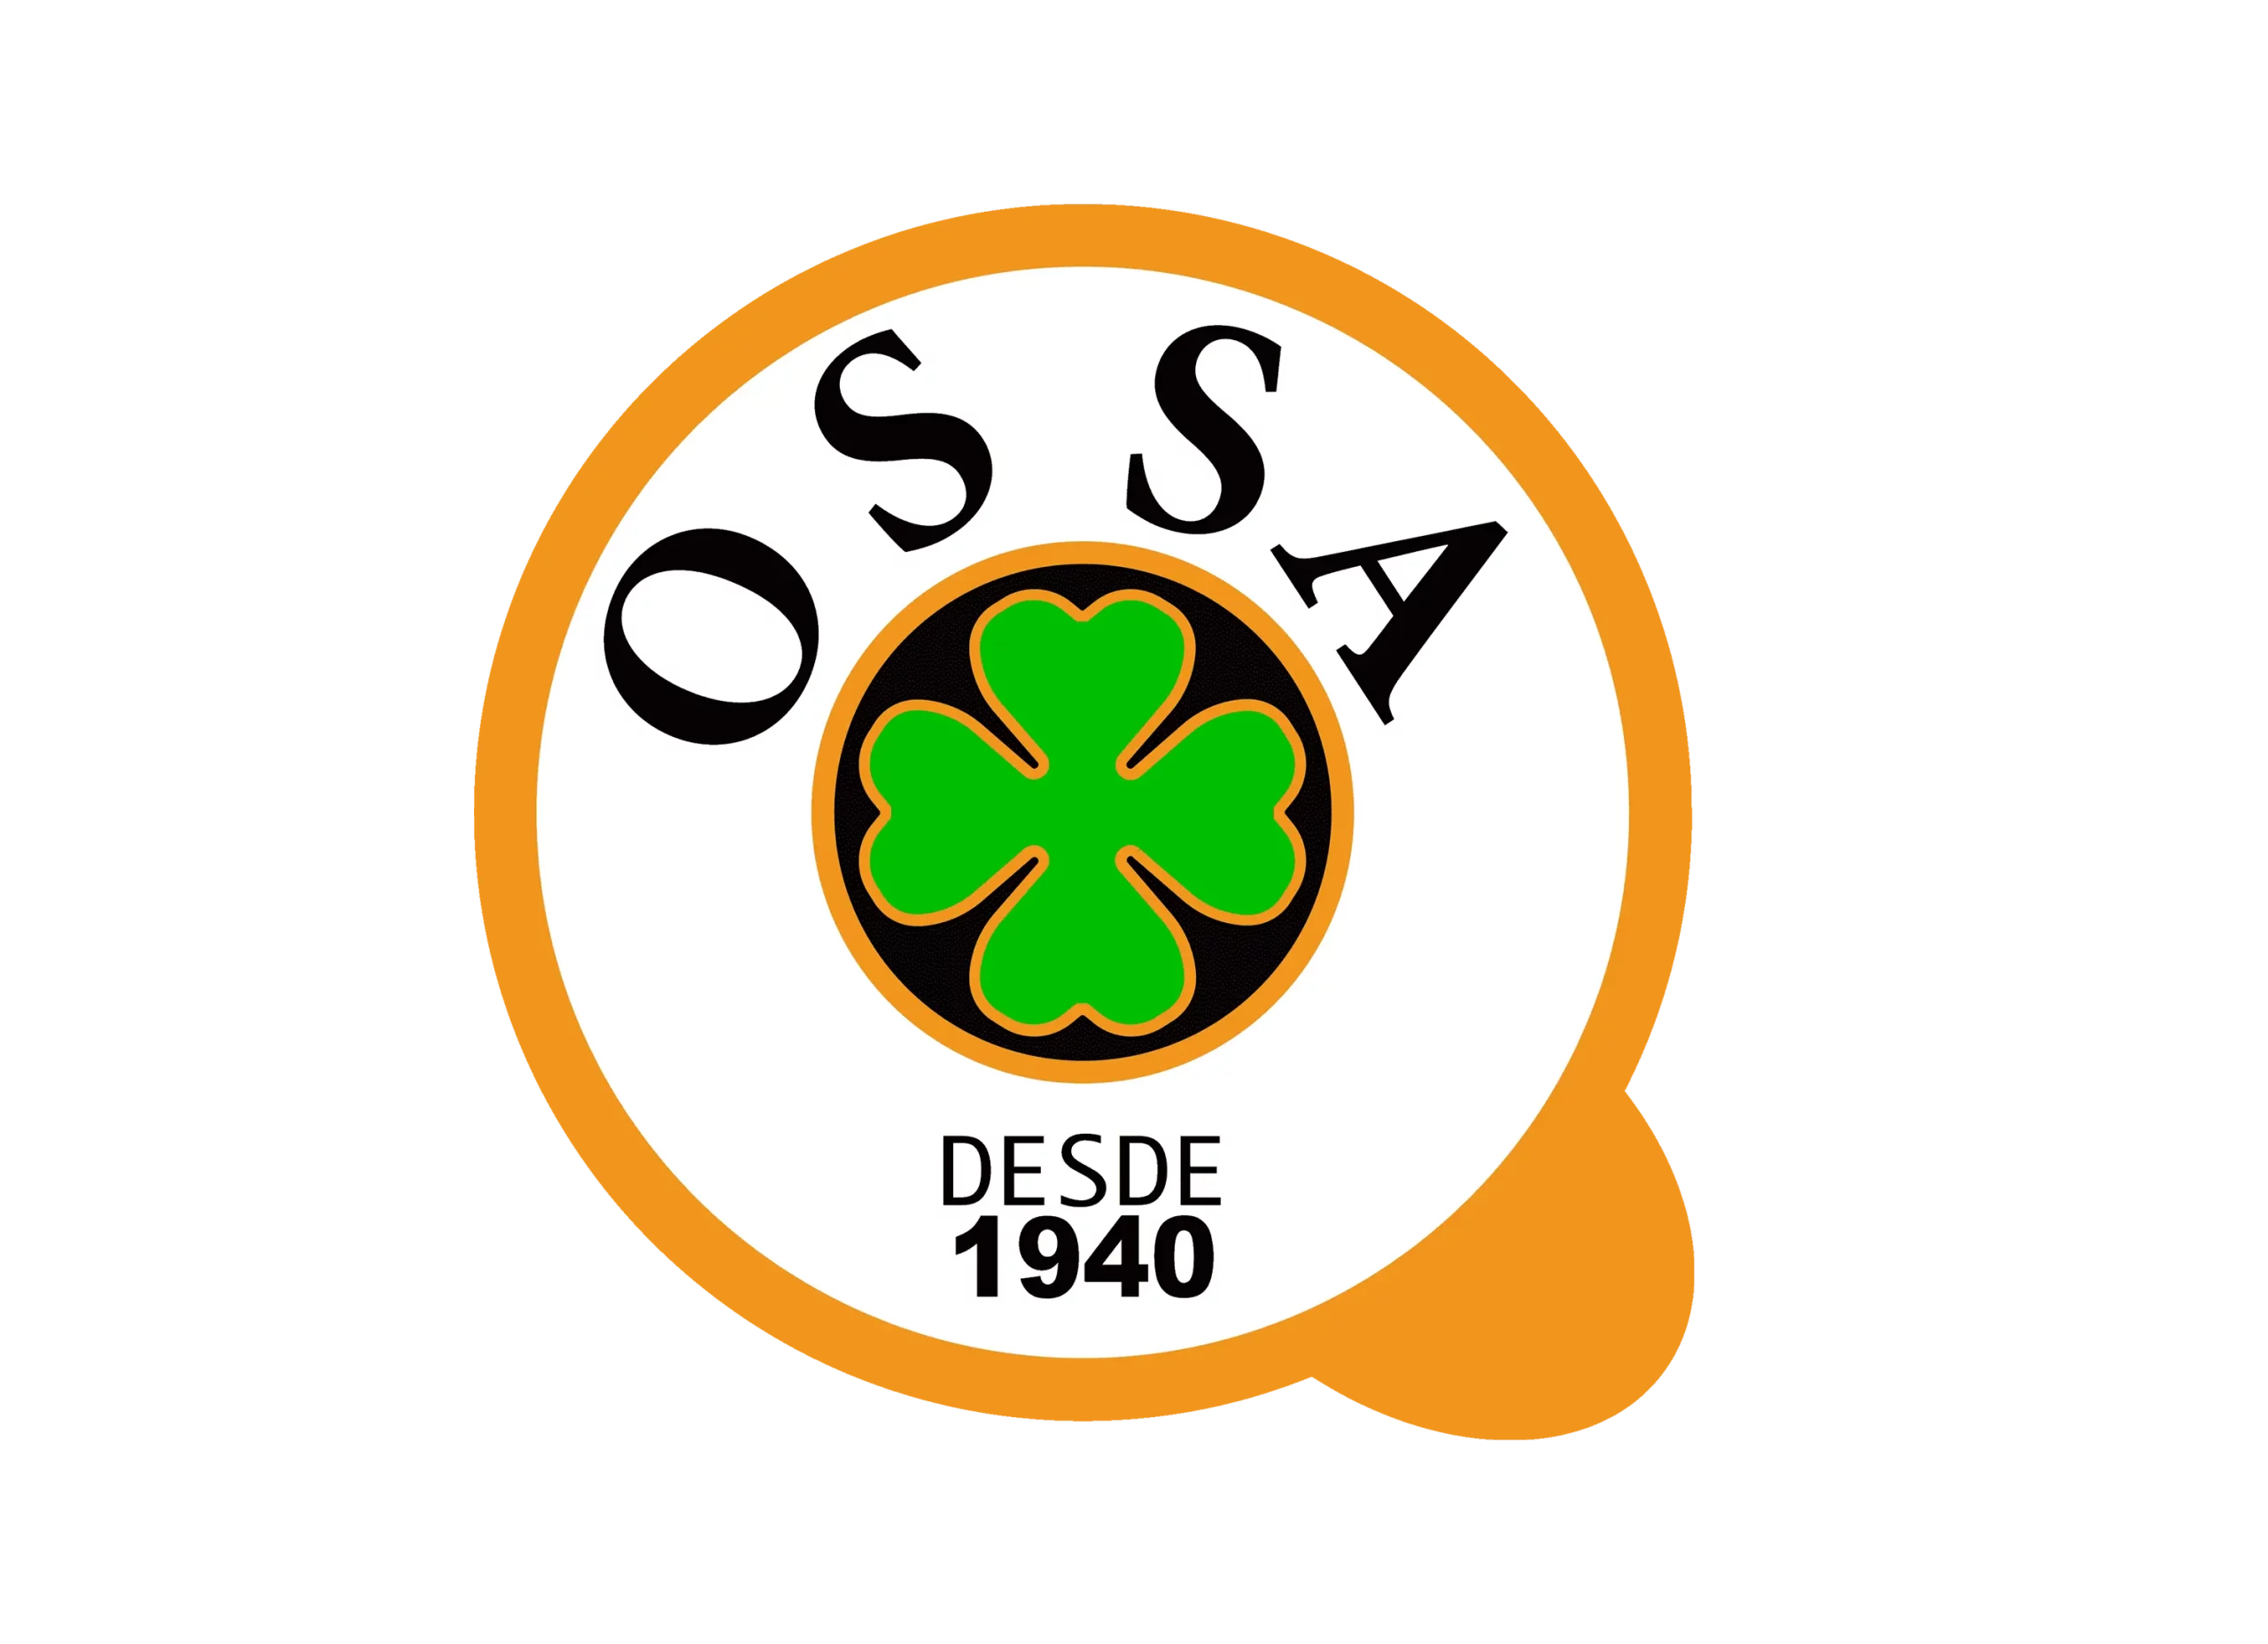 OSSA Logo 2010-2015